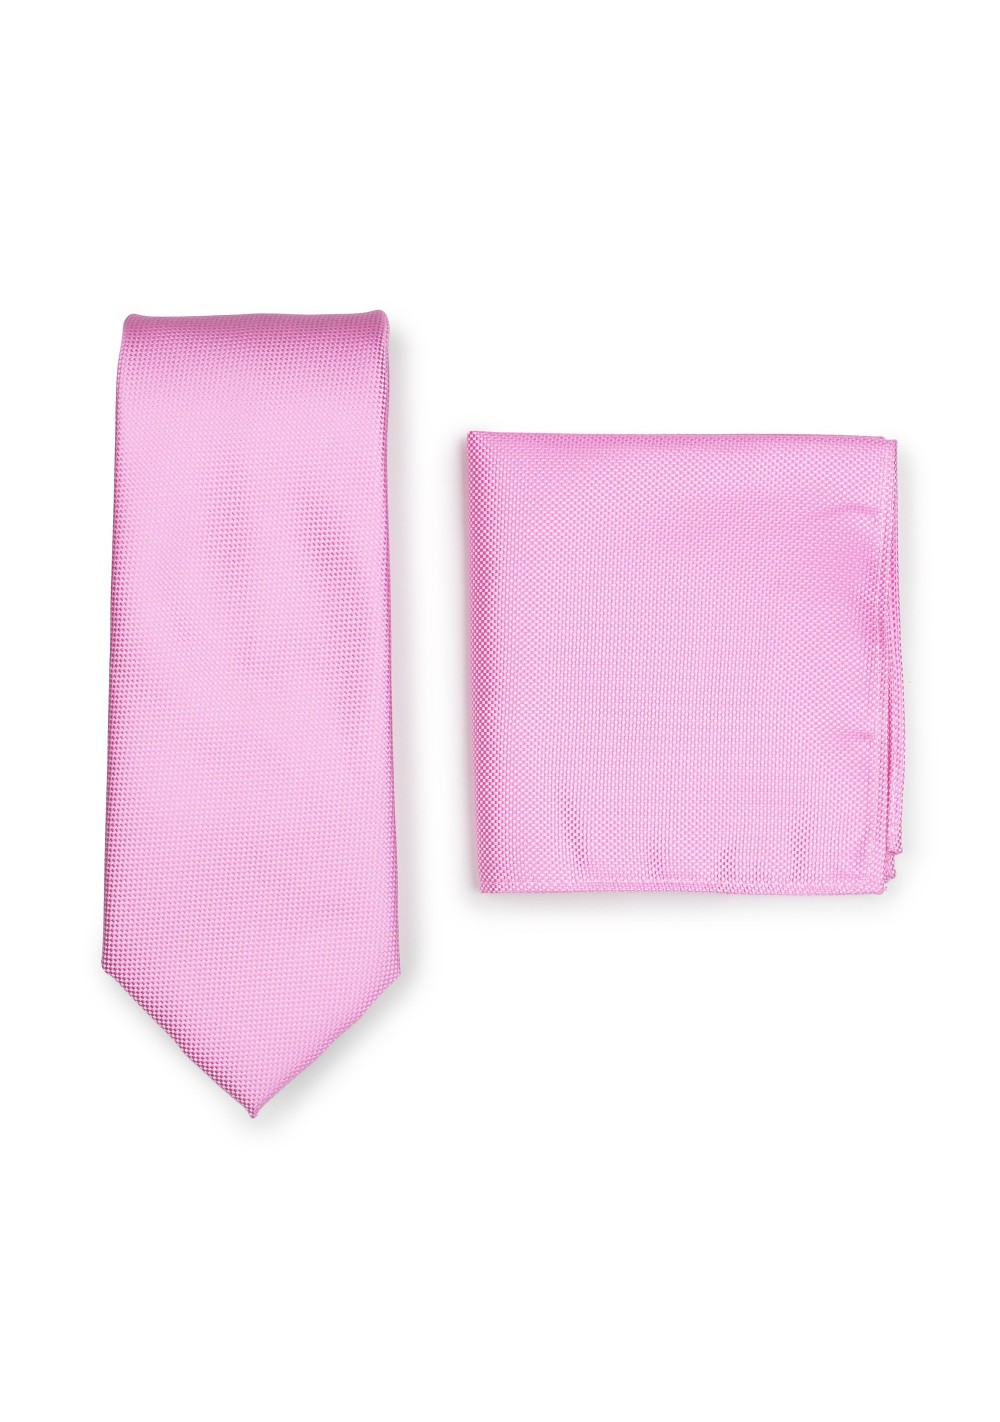 Matte Woven Tie Set in Carnation Pink